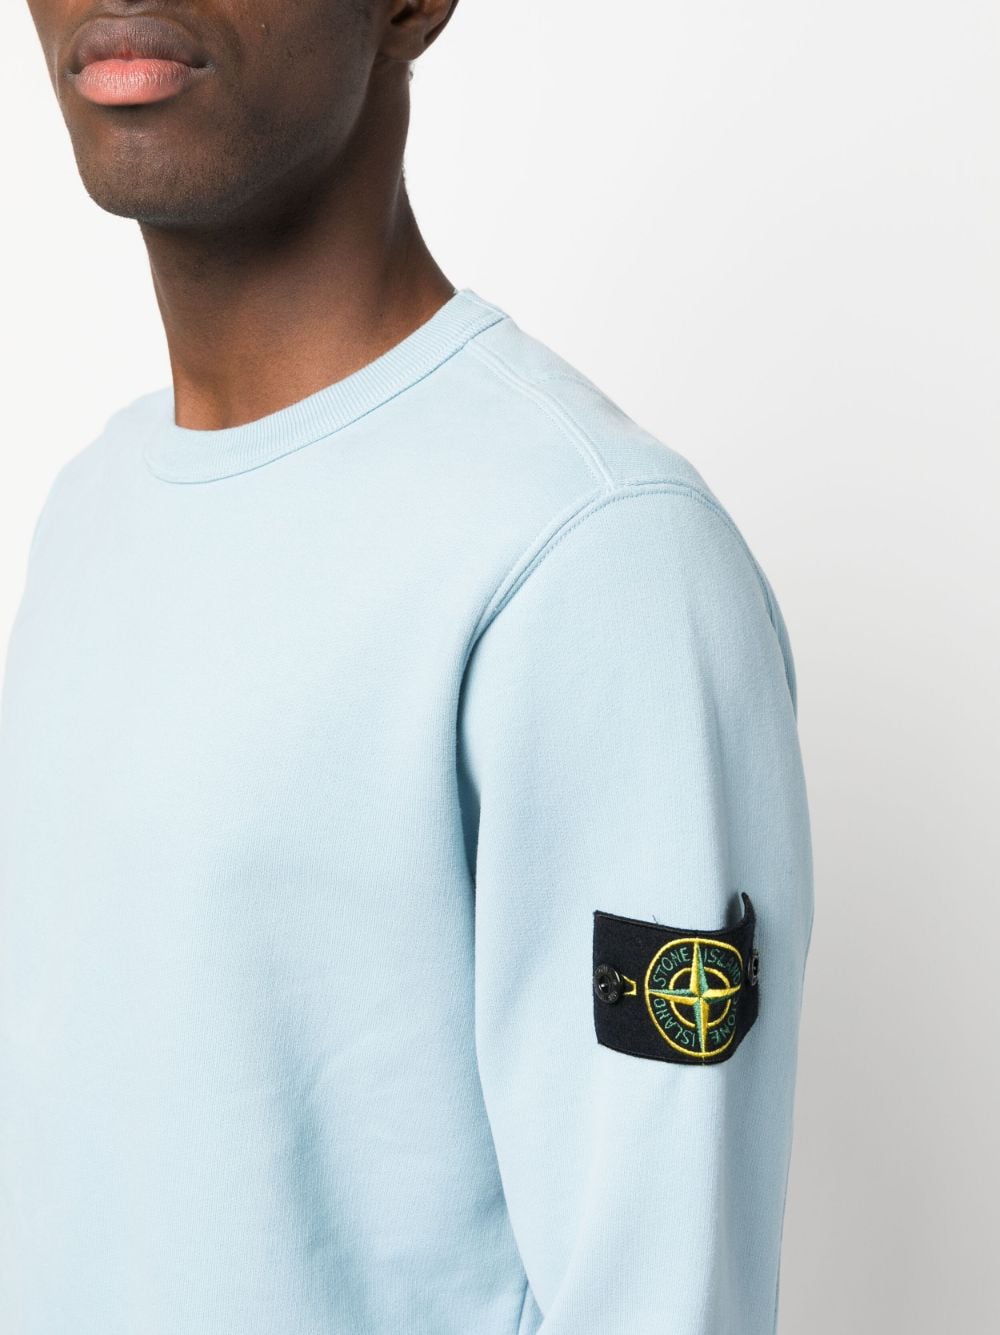 Stone Island Compass Patch Cotton Sweatshirt in Blue